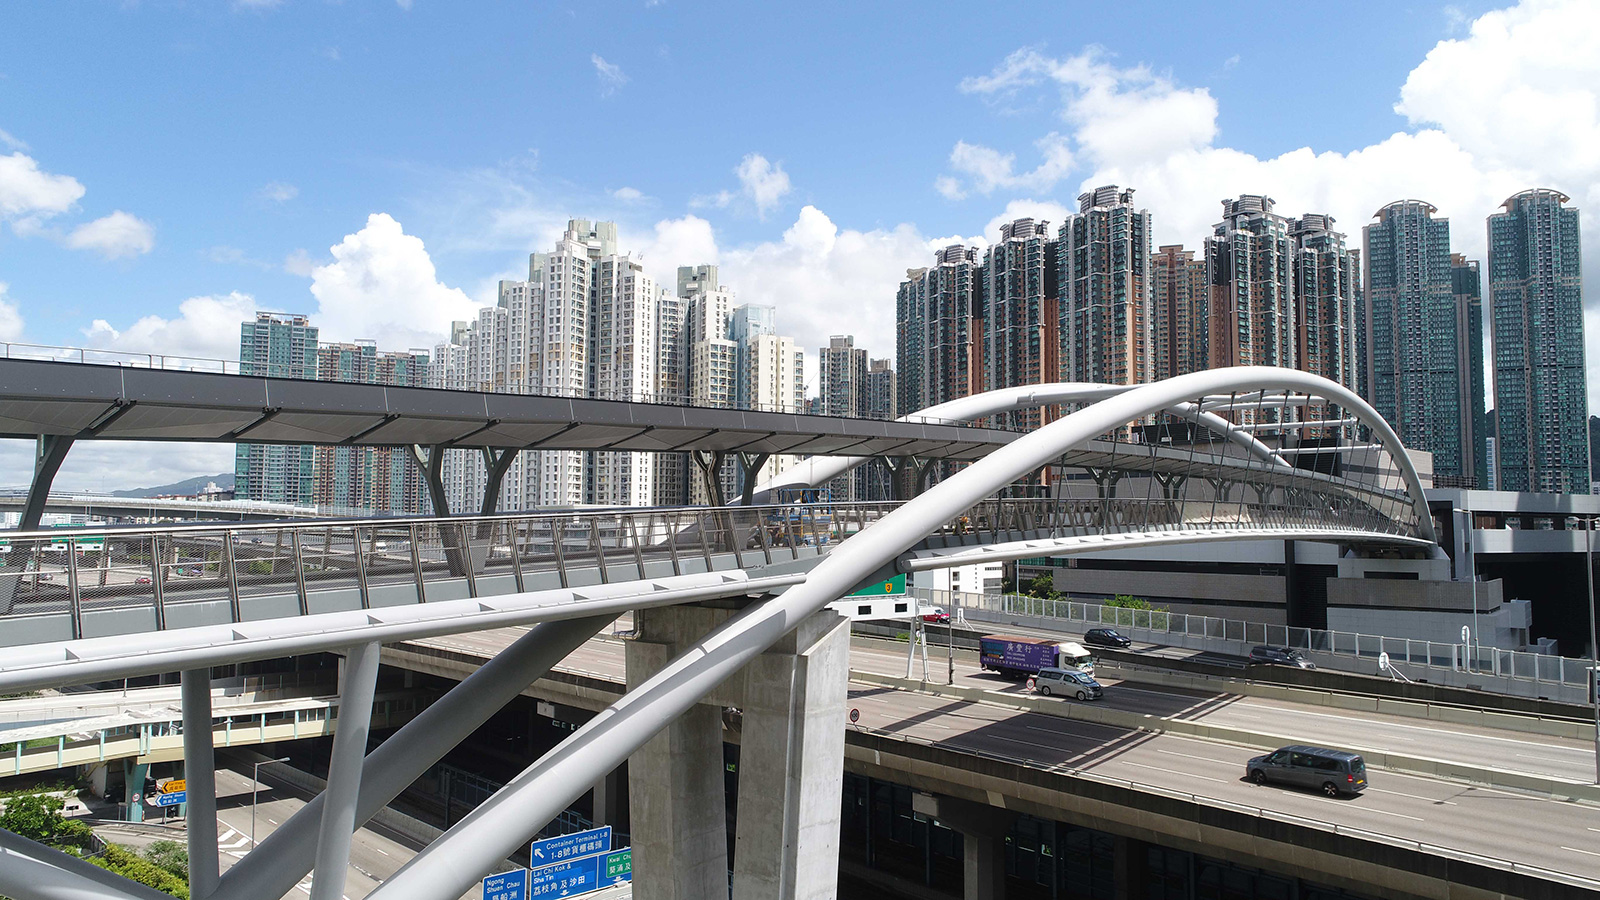 Connection Works of Footbridge linking Hoi Ying Estate and Hoi Tat Estate